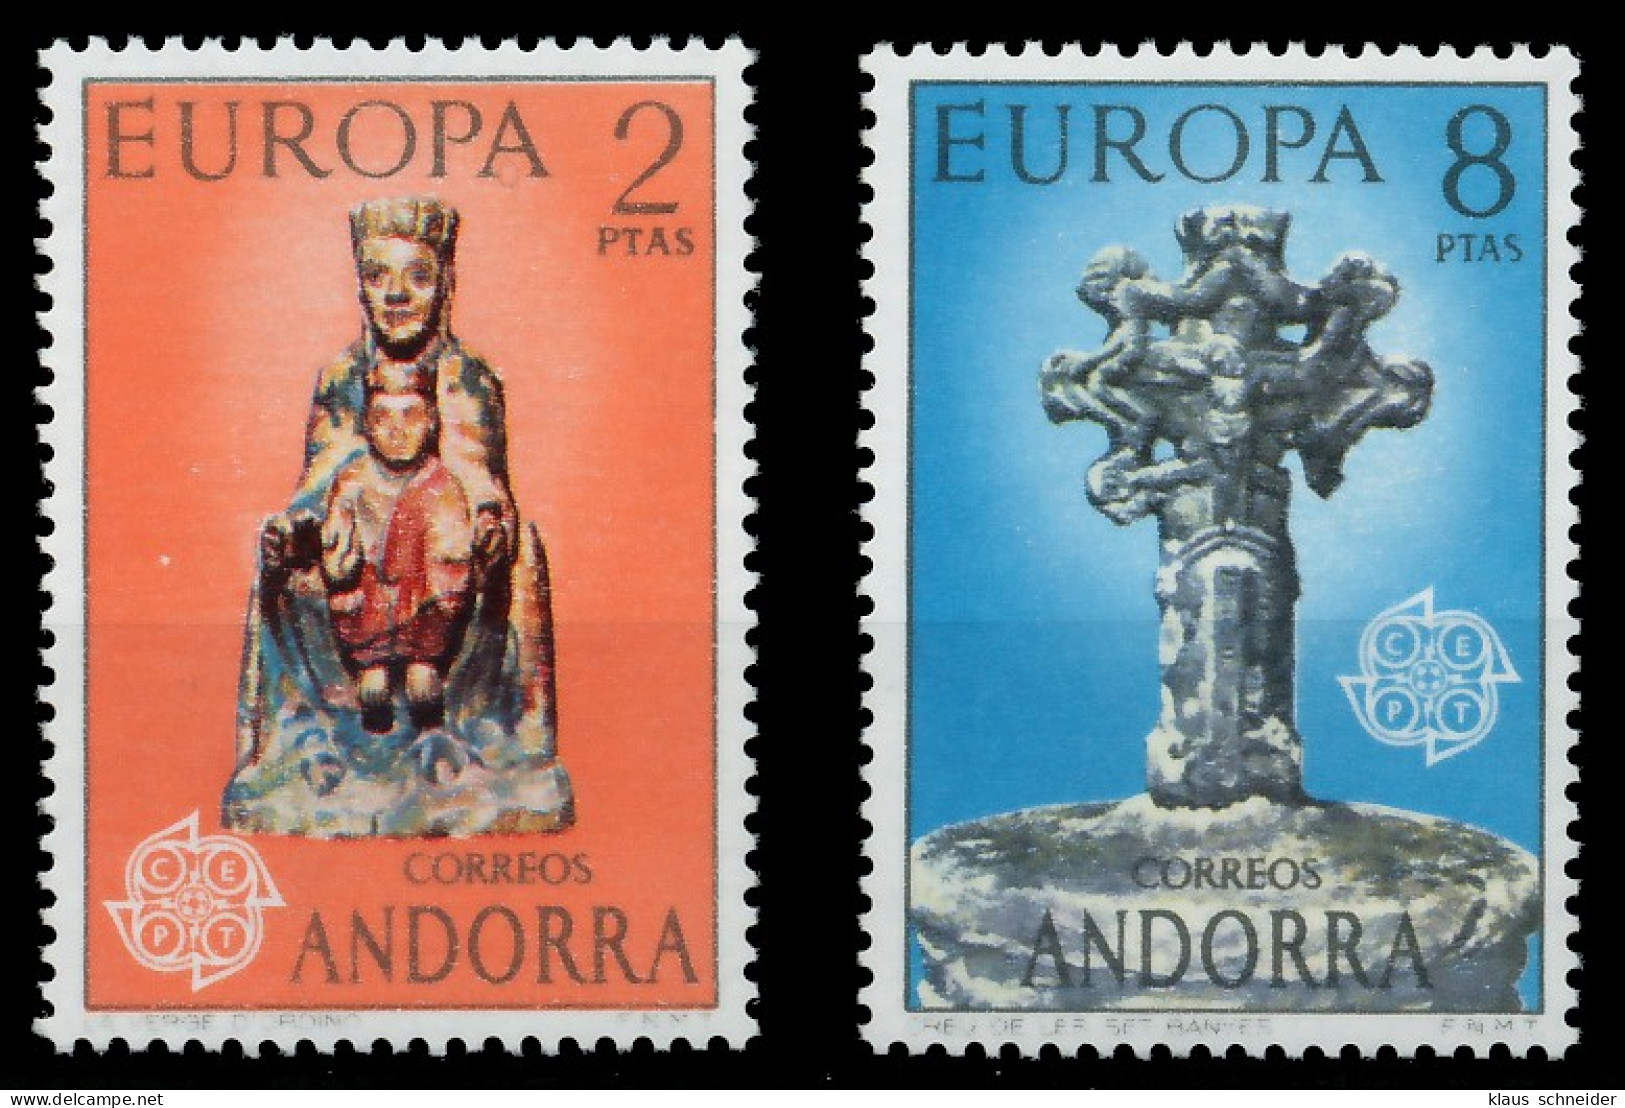 ANDORRA SPANISCHE POST 1970-1979 Nr 88-89 Postfrisch X0407D2 - Unused Stamps